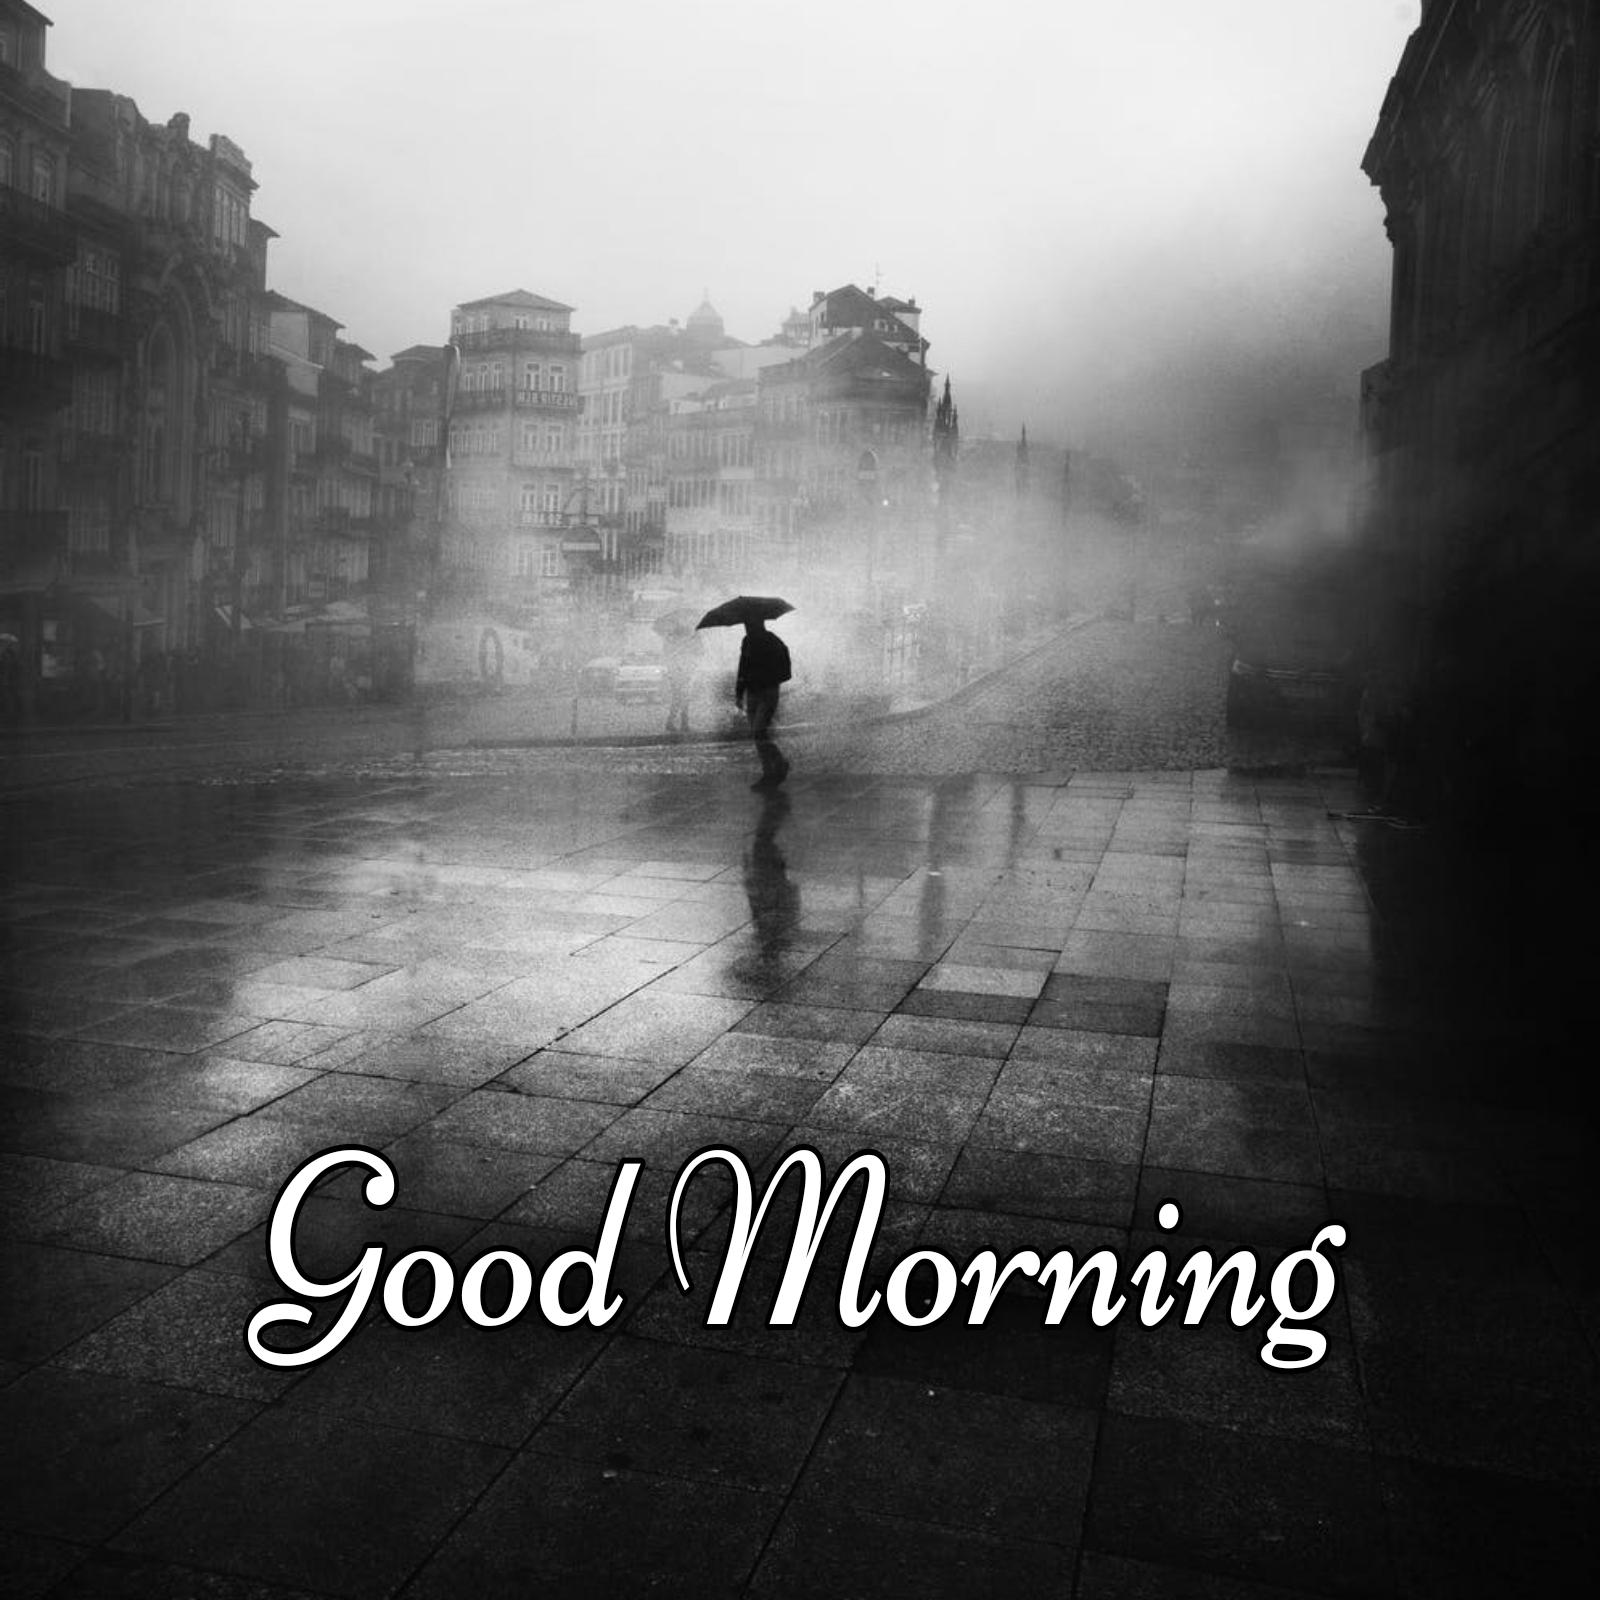 Rain Images Good Morning